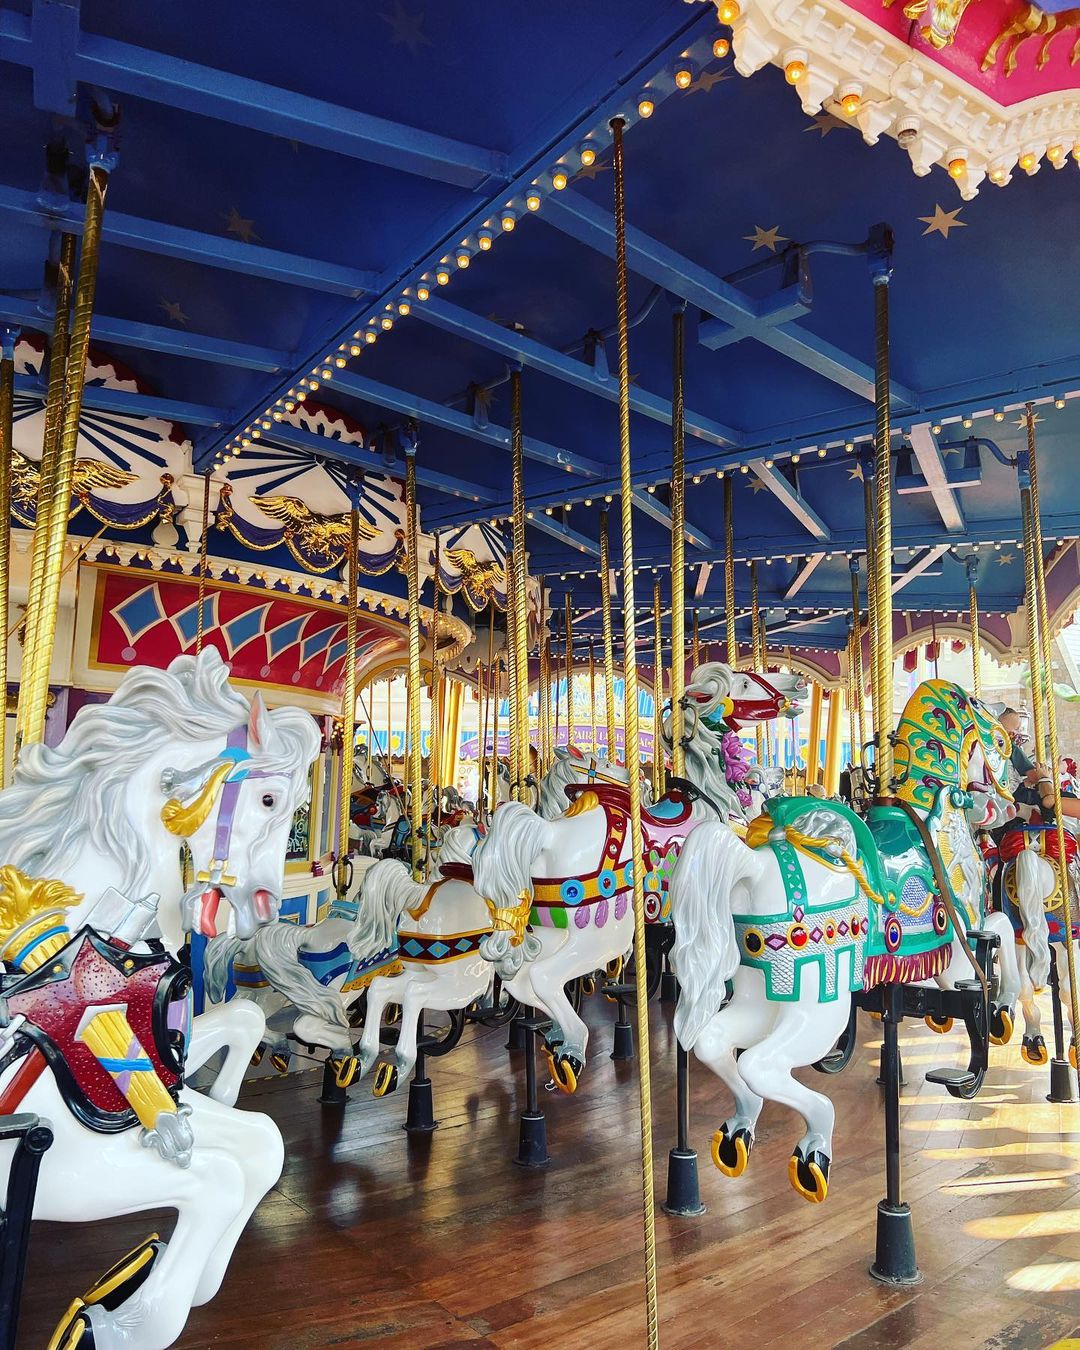 Prince Charming Regal Carrousel - Atracción del Reino Mágico